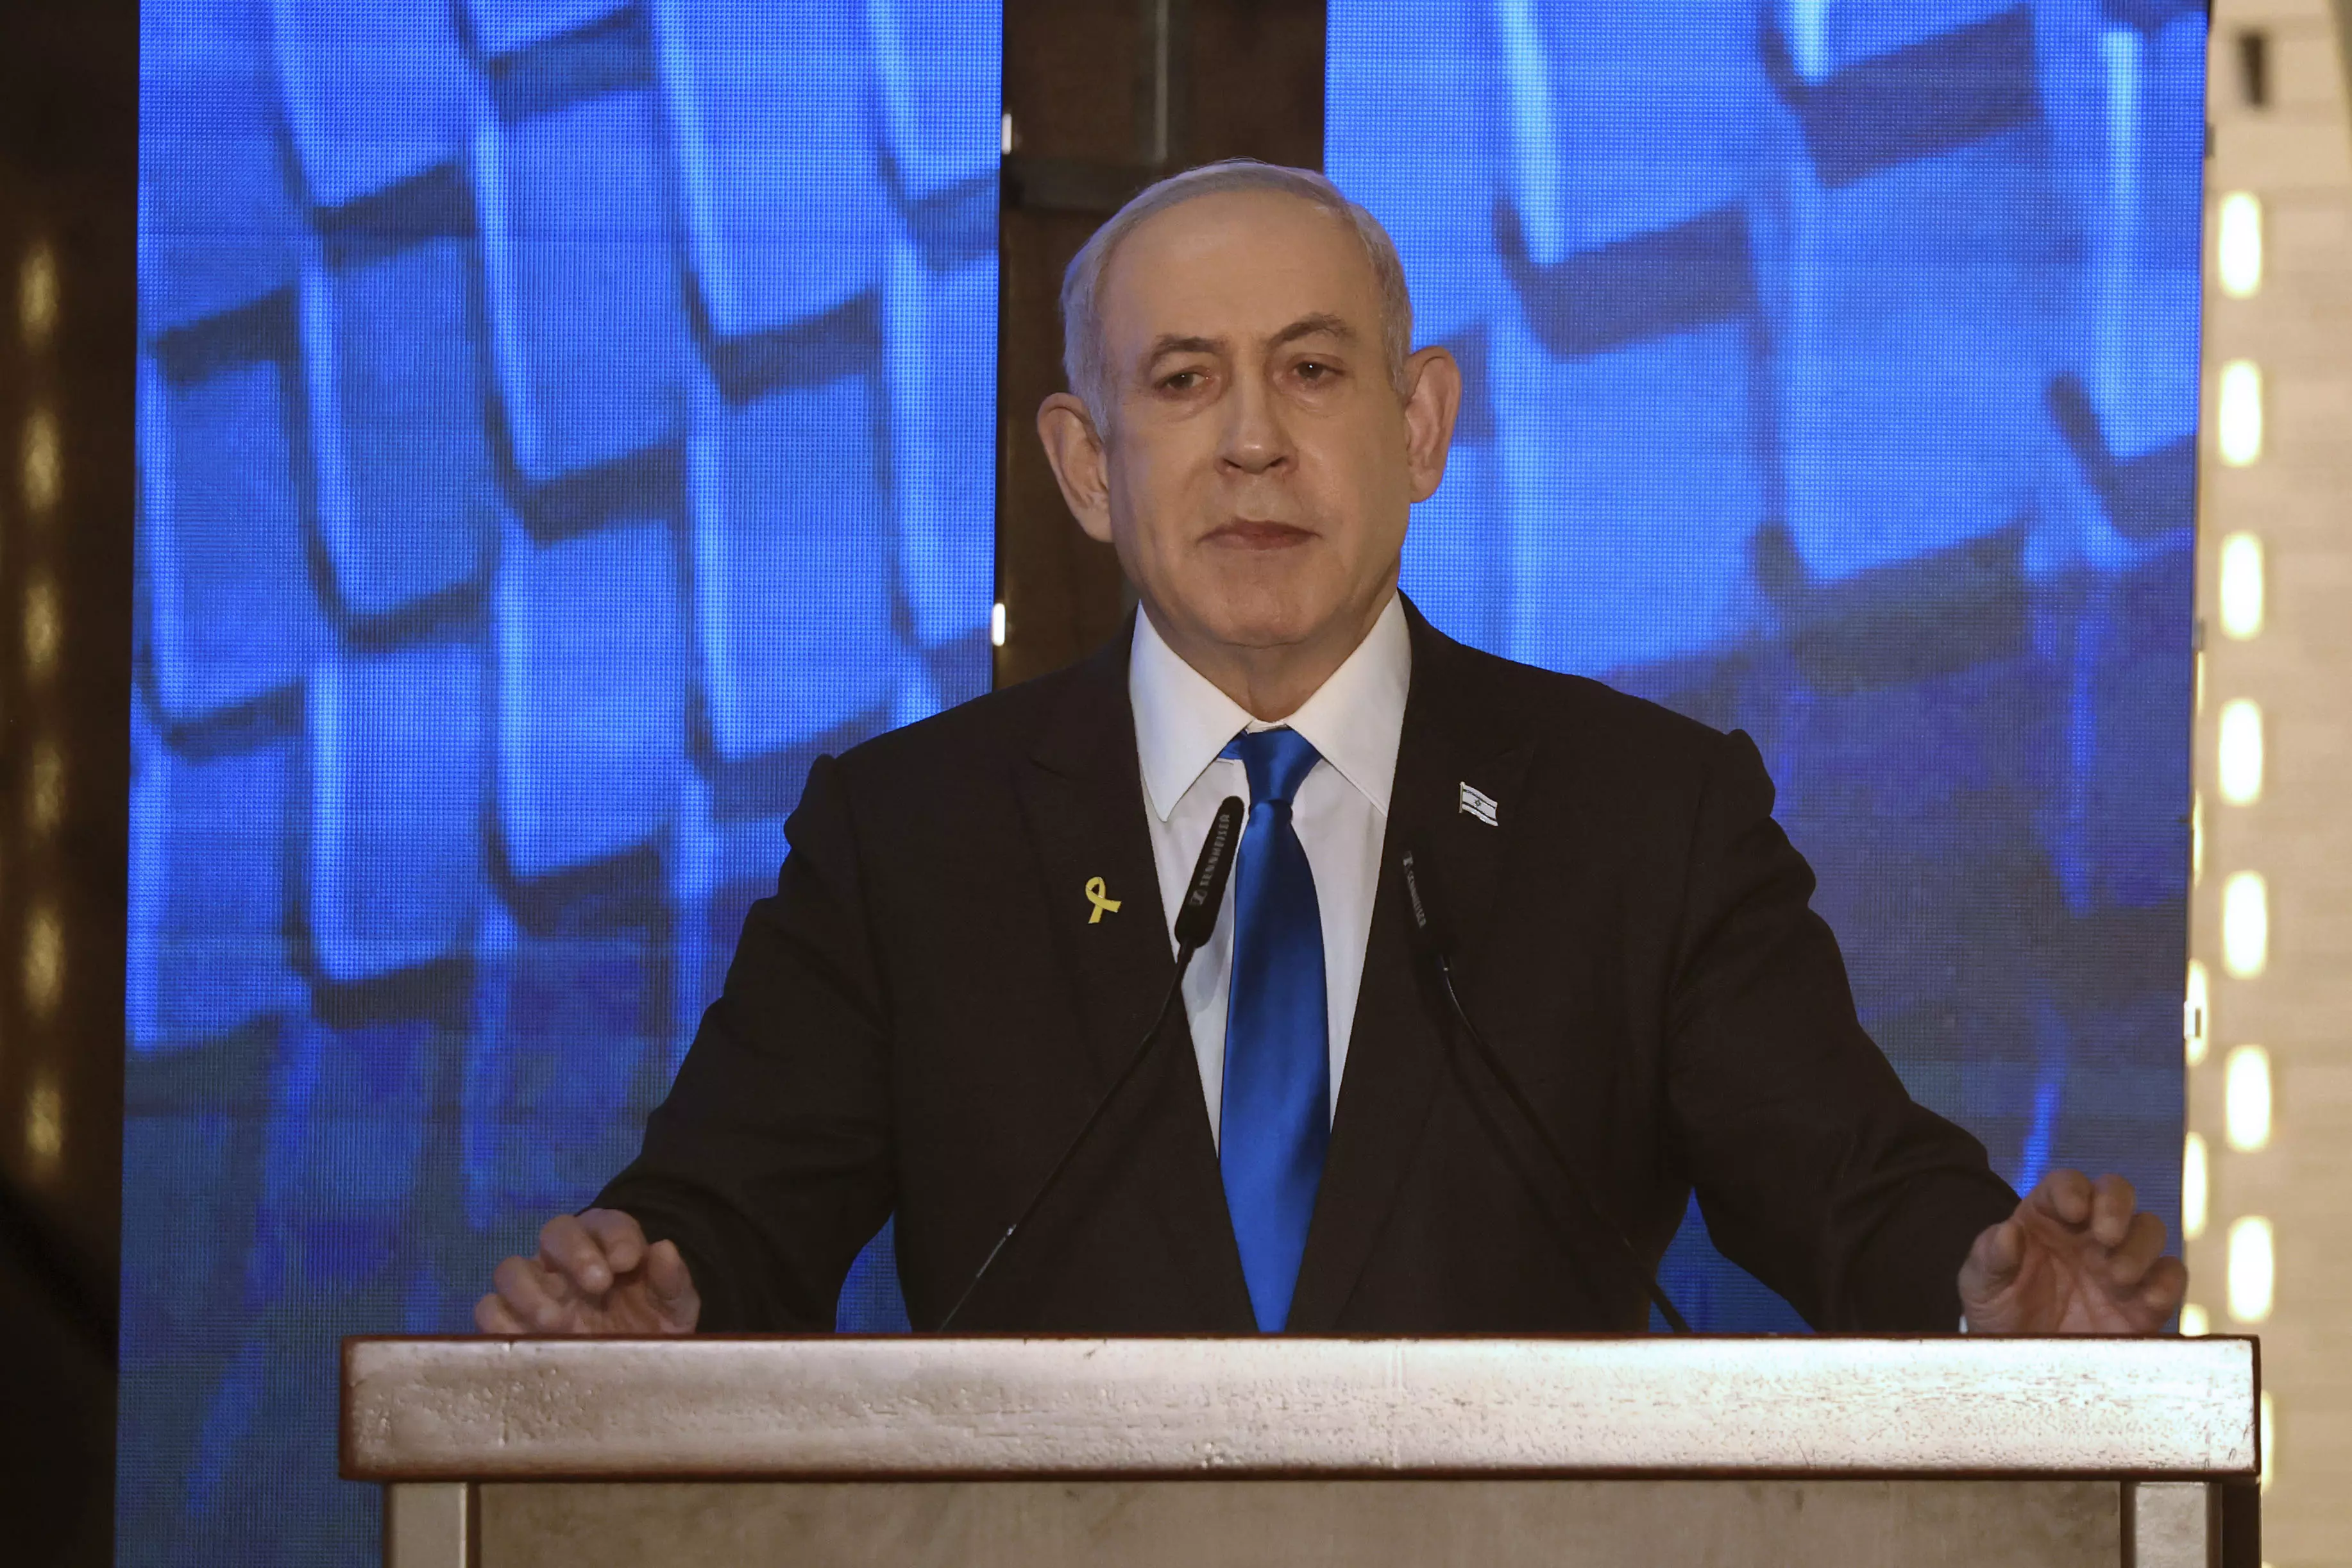 Netanyahu faces growing pressure at home after Bidens Gaza proposal